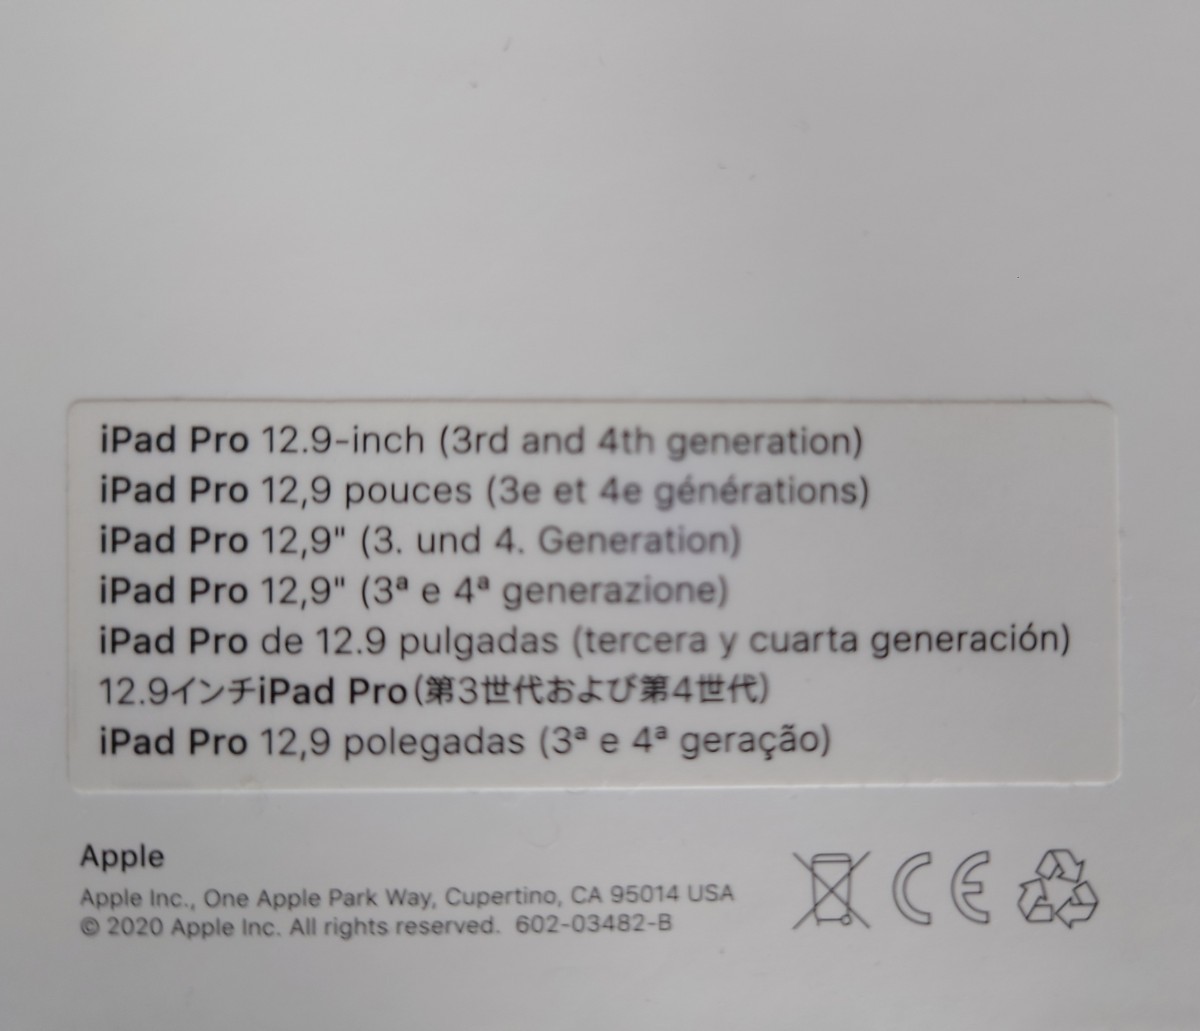 iPad Pro 12.9インチ Magic Keyboard US配列